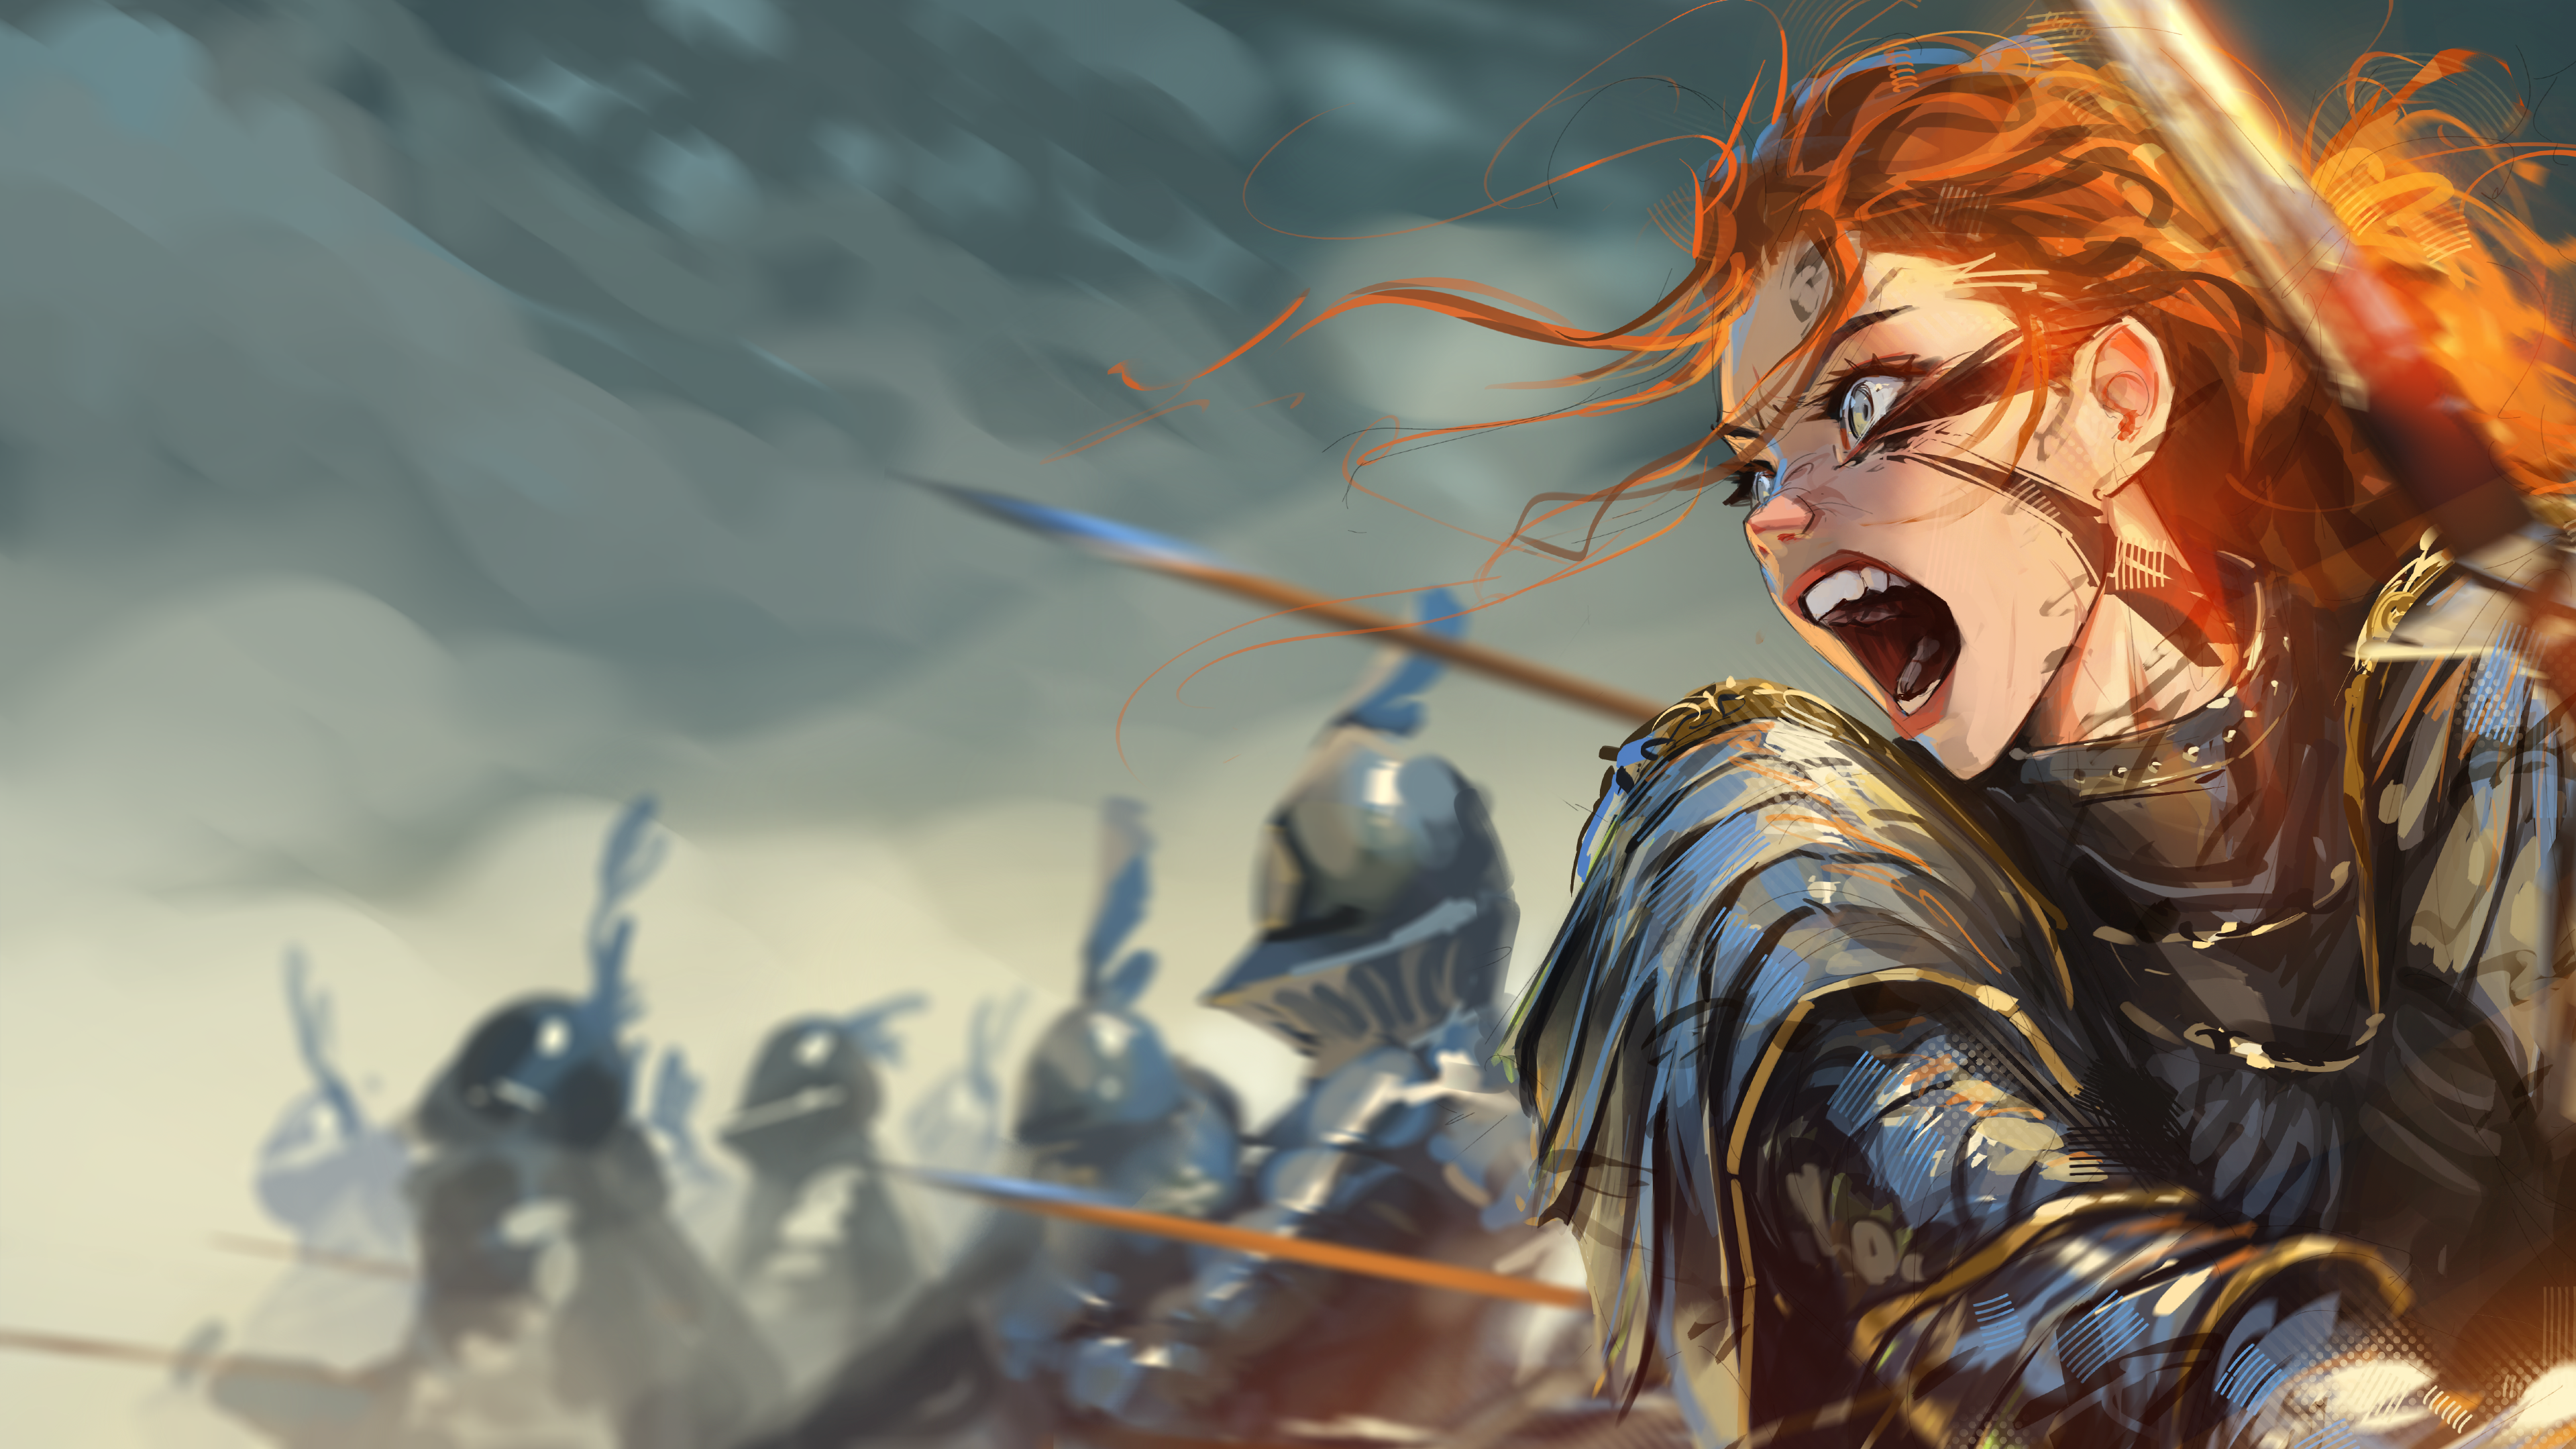 Sam Yang Digital Art Artwork Illustration Women Long Hair Redhead Screaming Battle Knight 4K Armor O 3840x2160